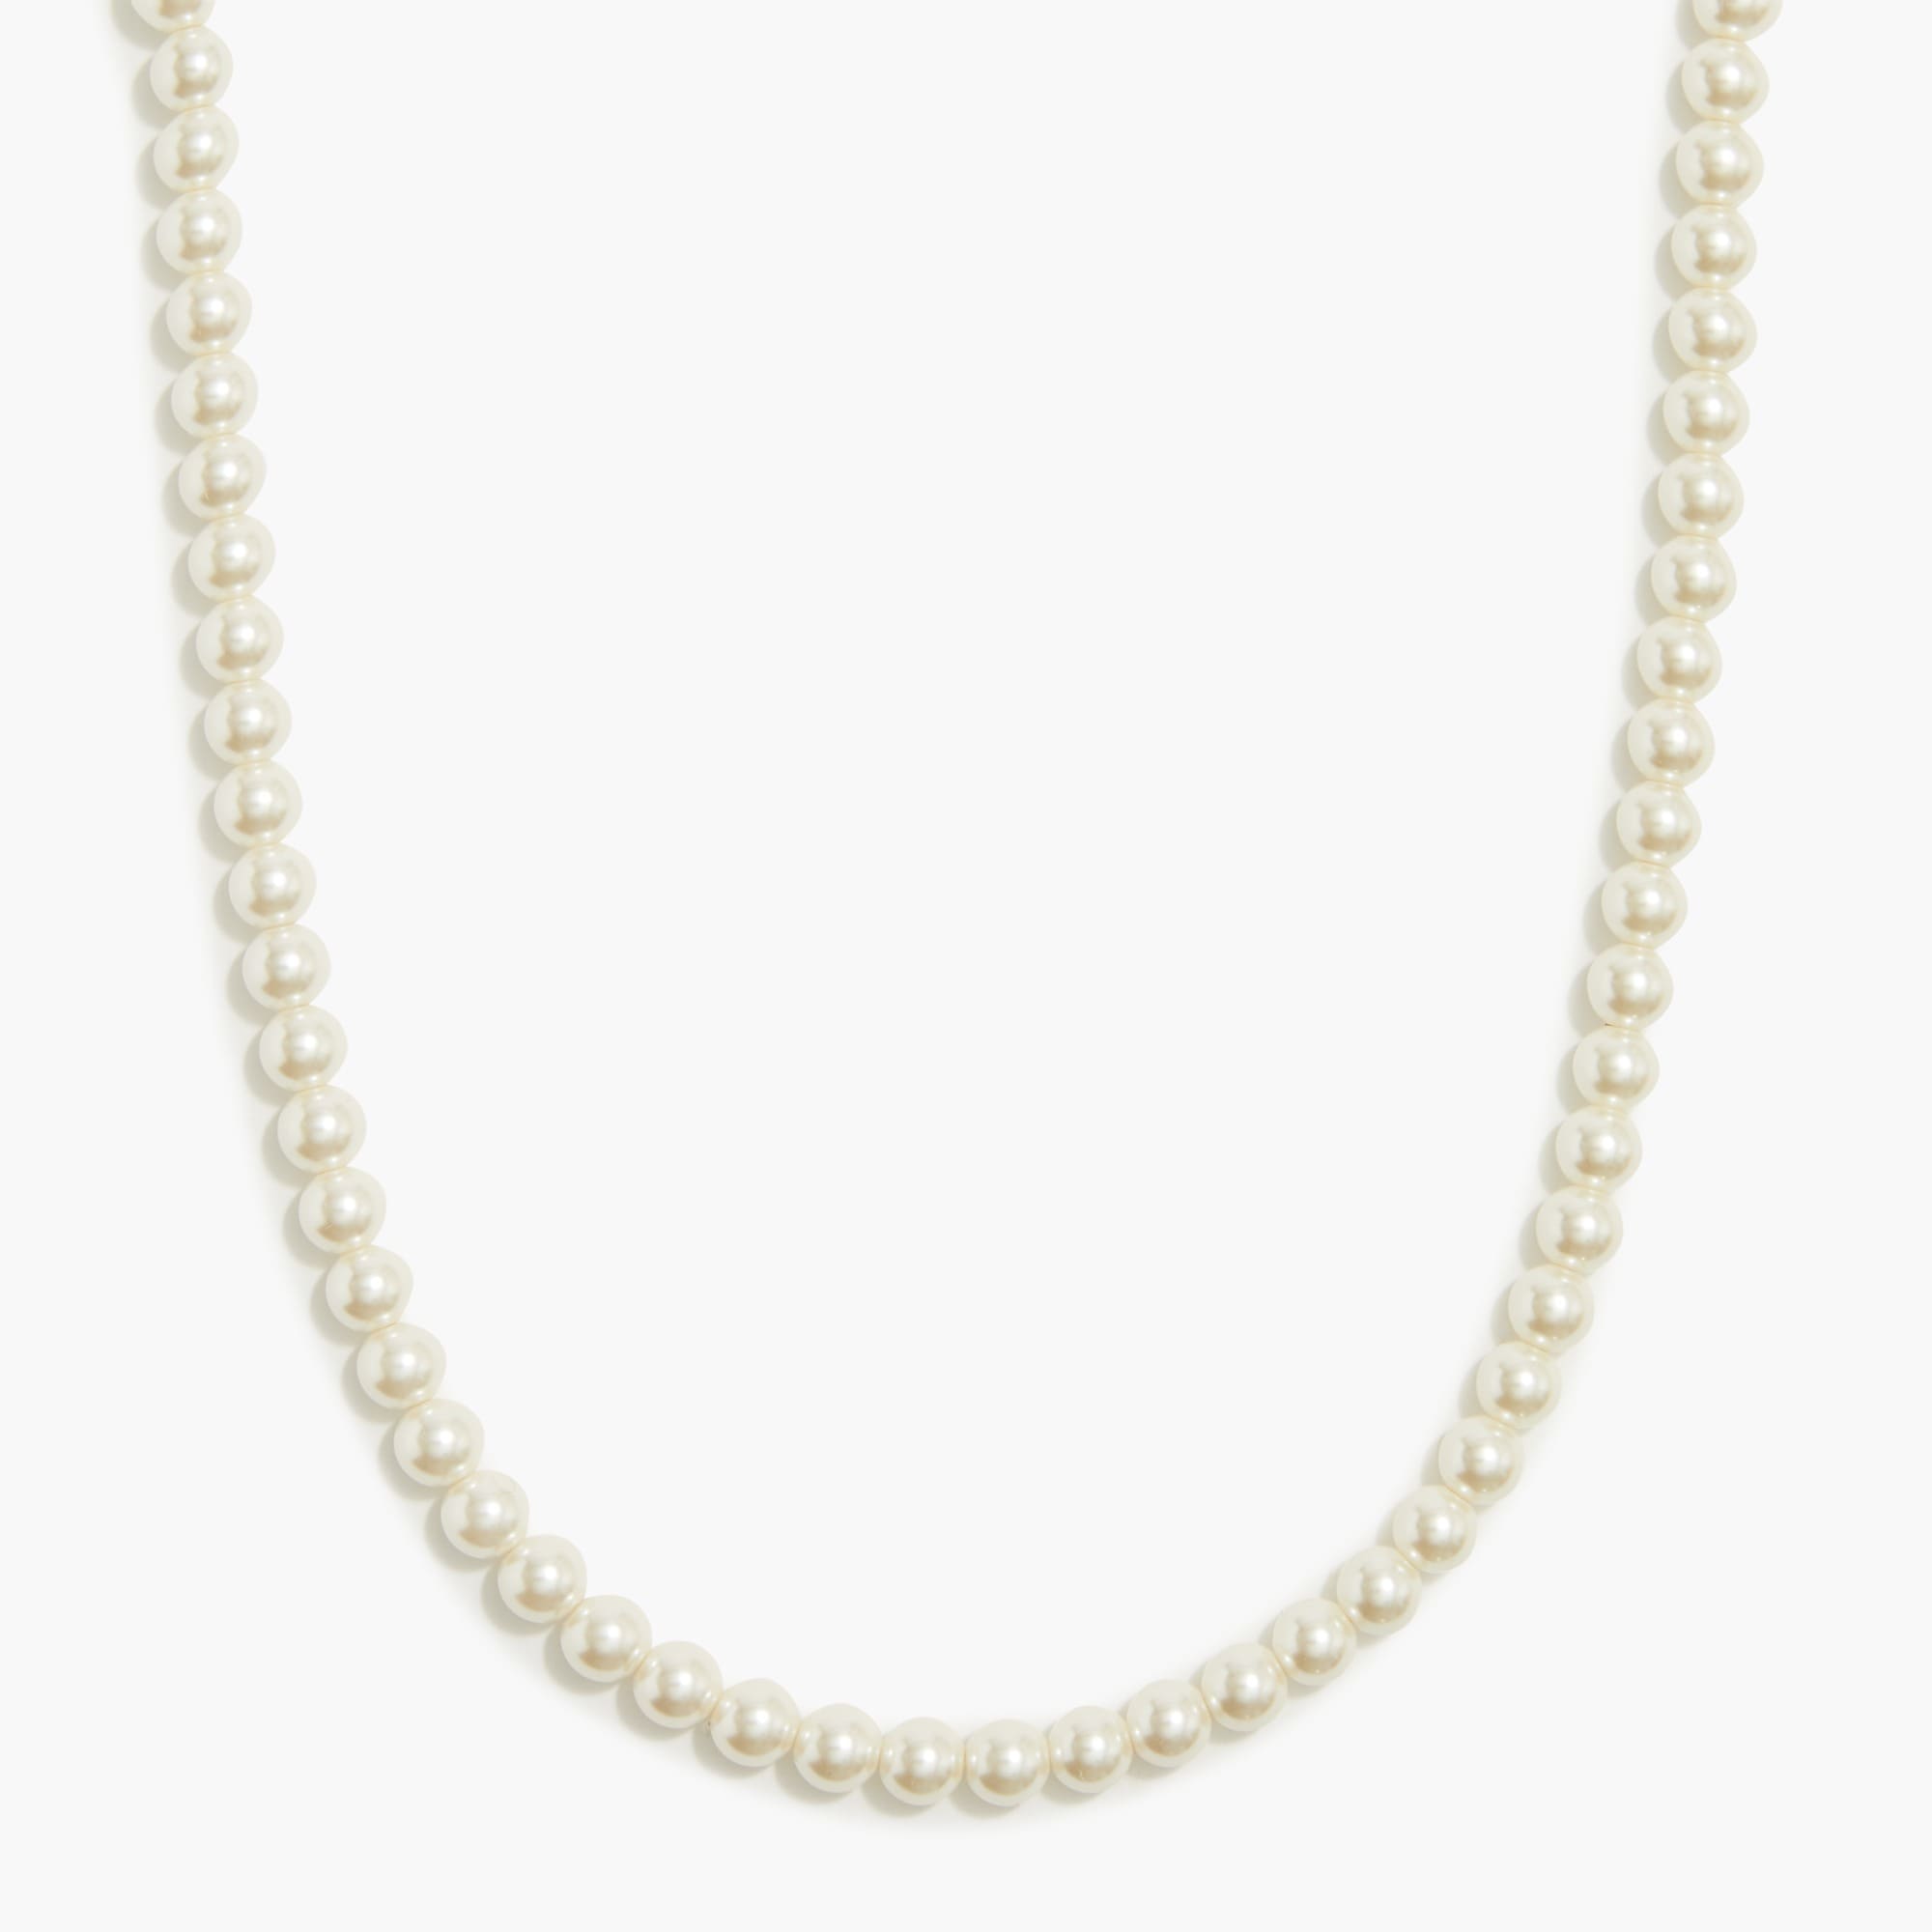 Jcrew Pearl strand necklace